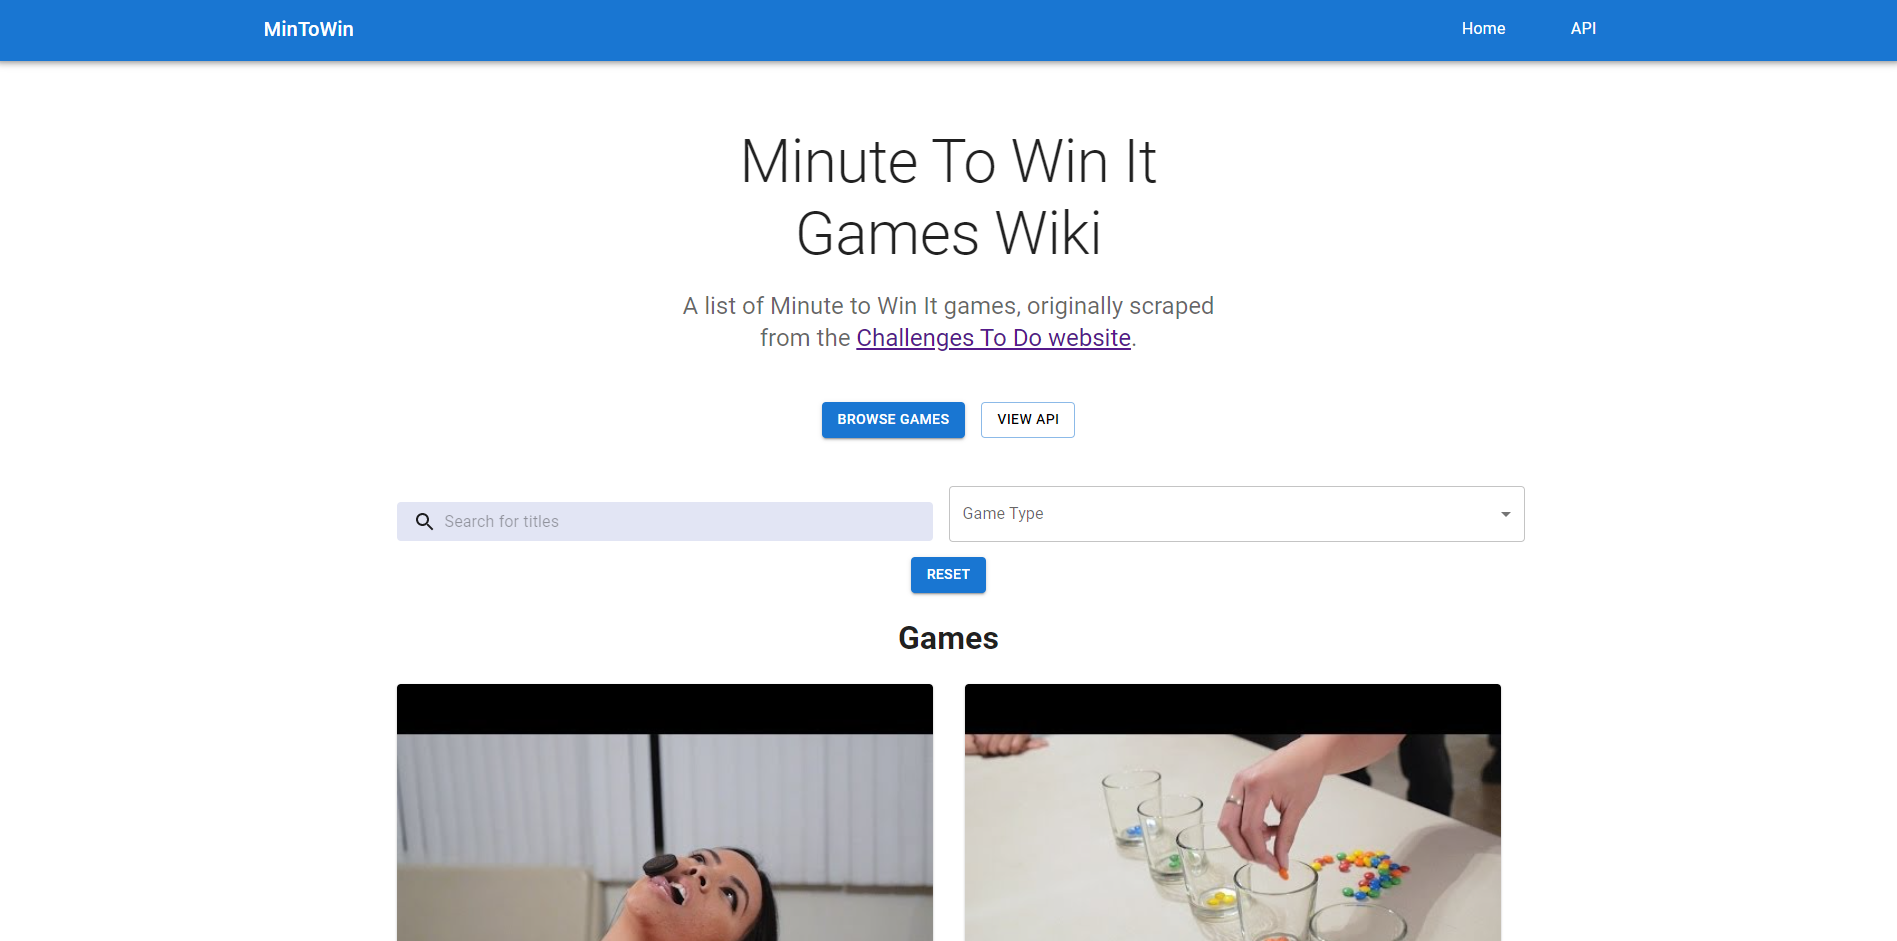 Minute To Win It Games Wiki & API demo gif